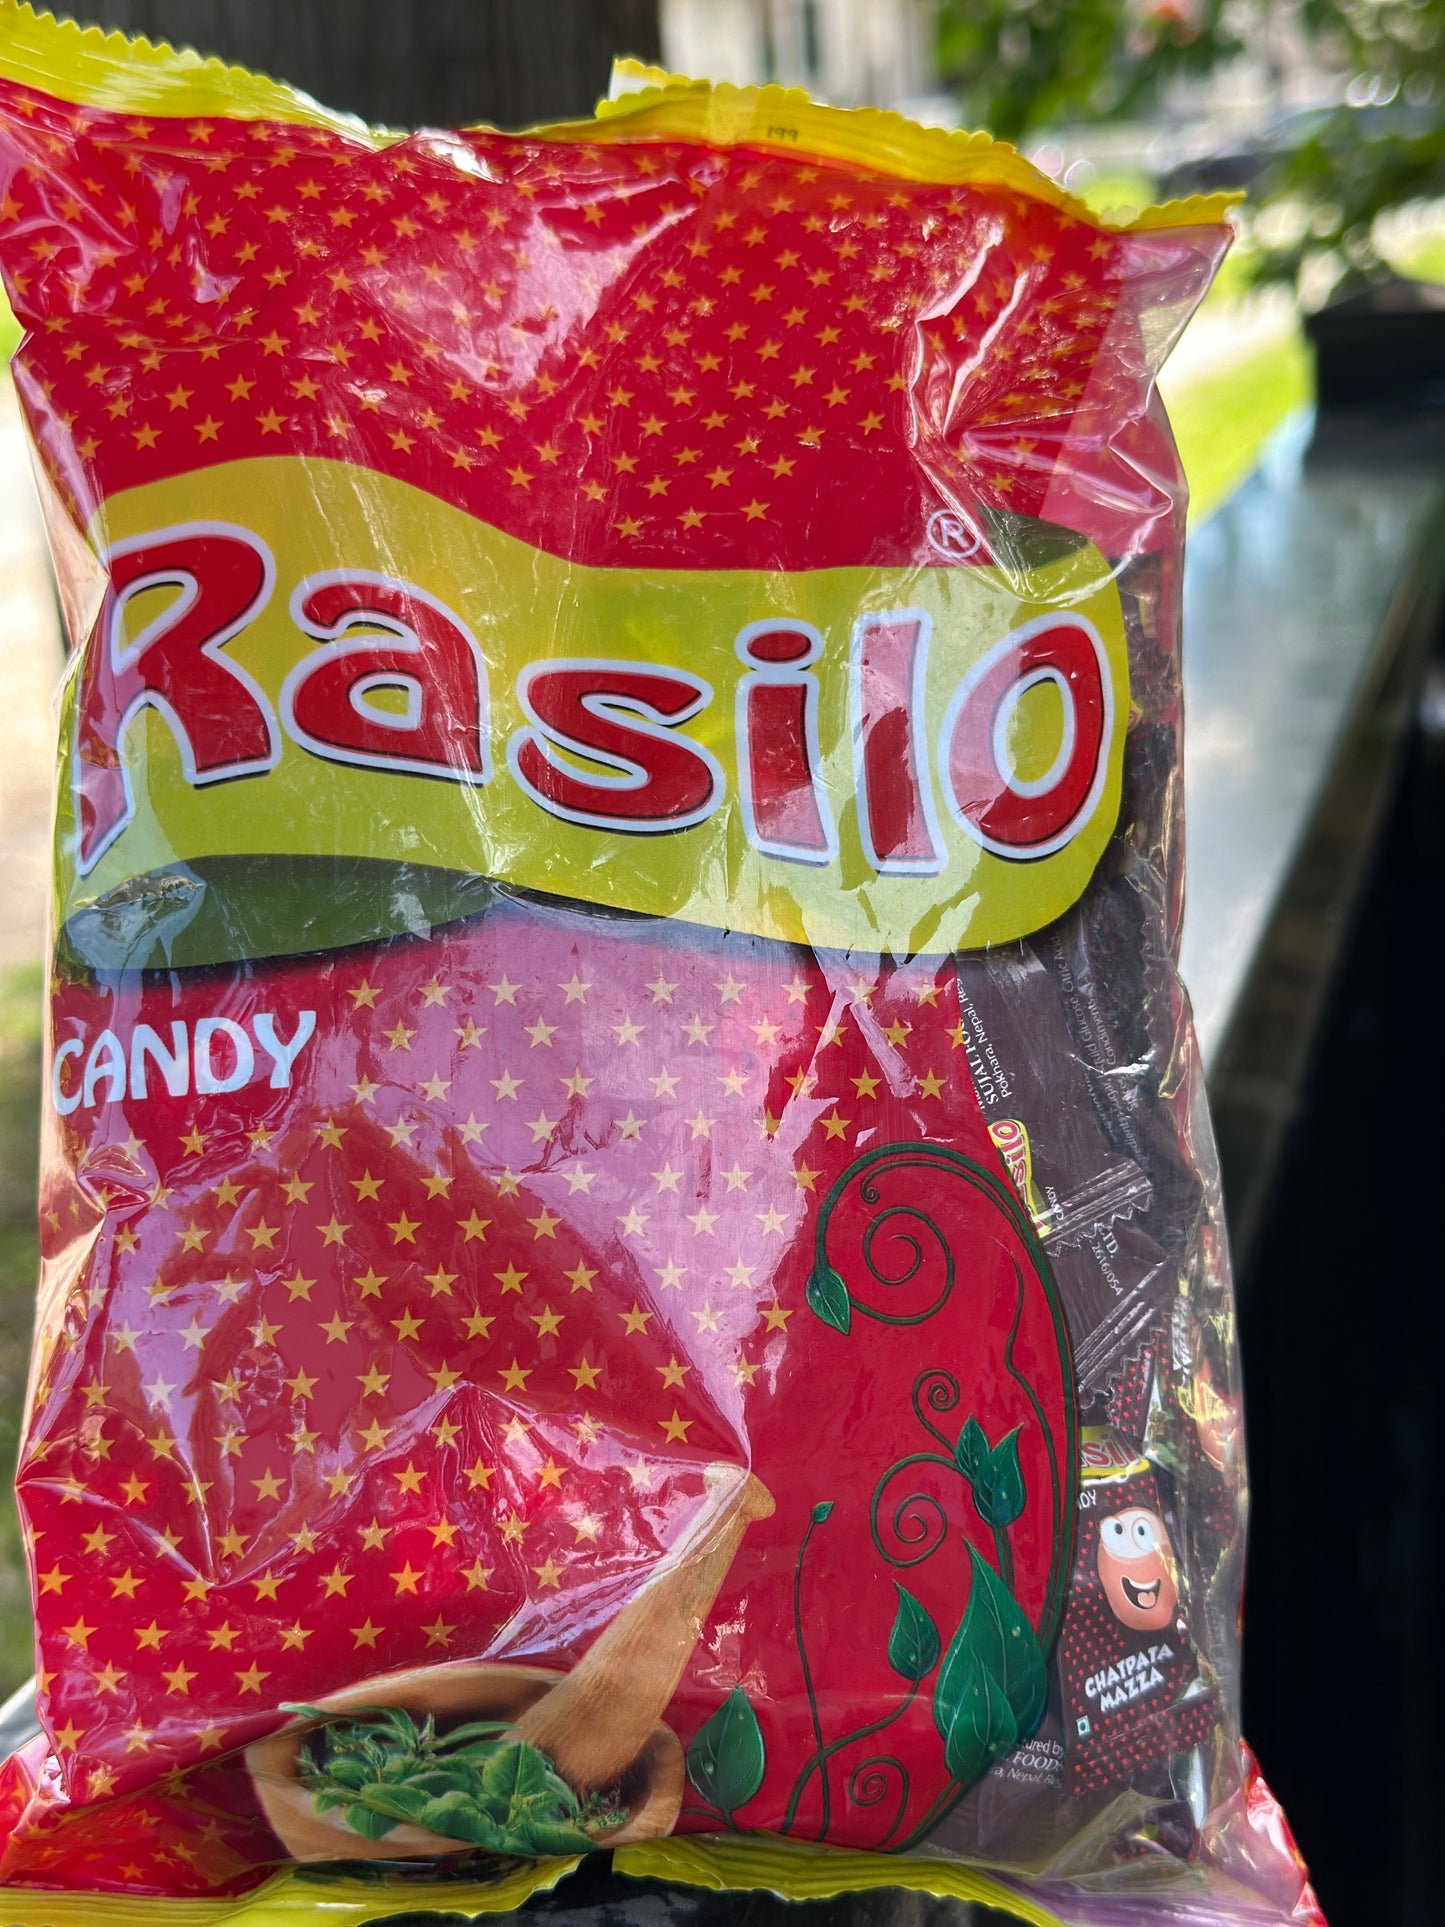 Rasilo Candy